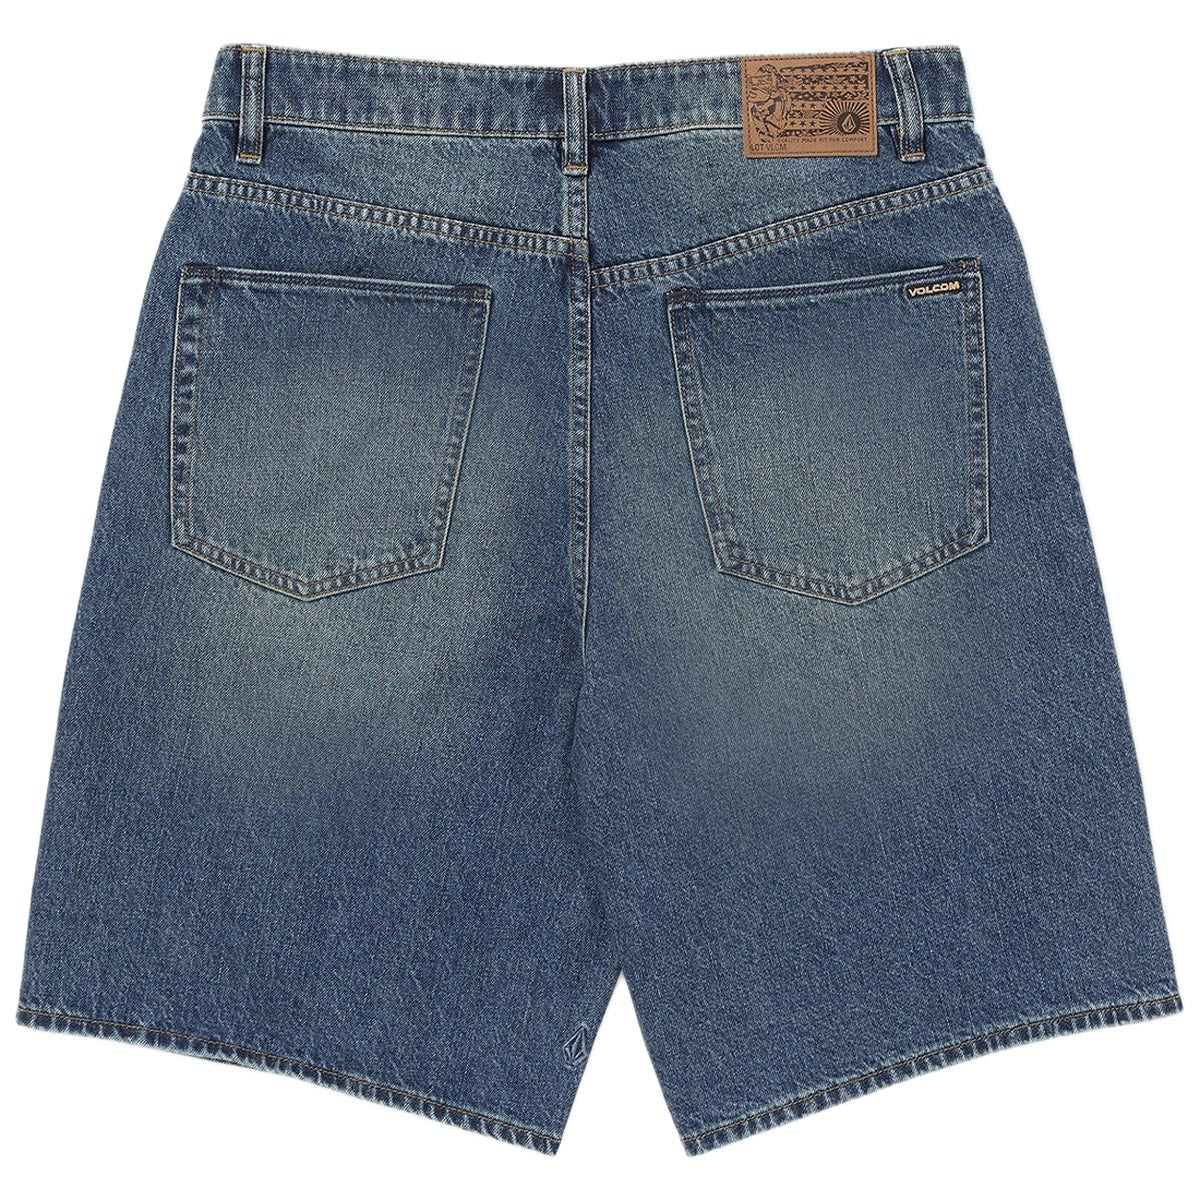 Volcom Billow Denim Shorts - Classic Blue image 2